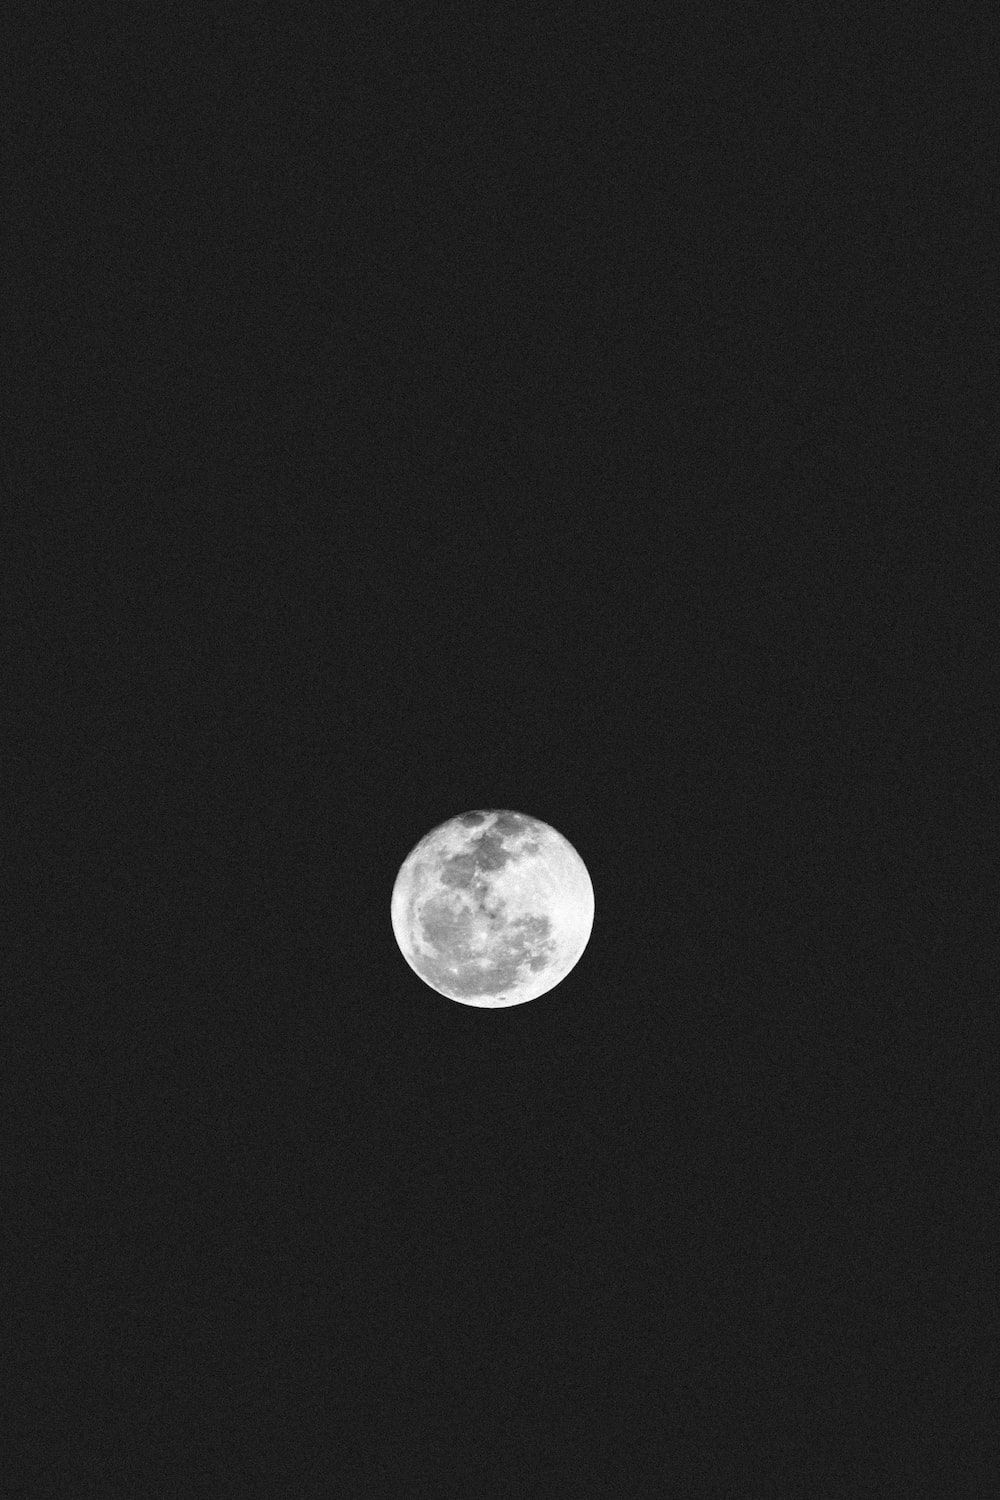 A full moon in a black sky - Black